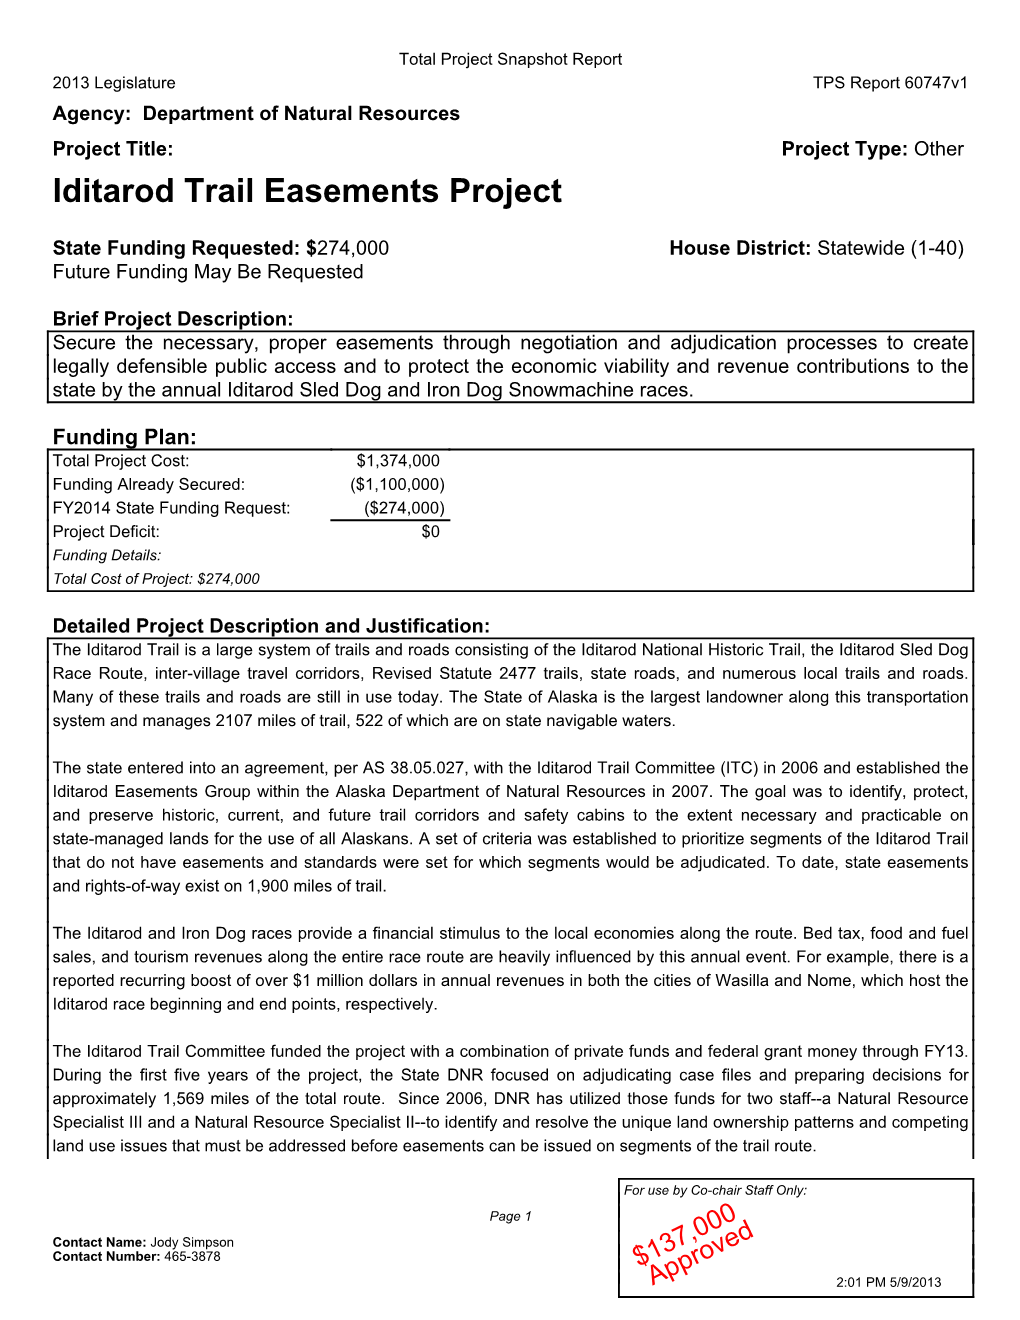 Iditarod Trail Easements Project